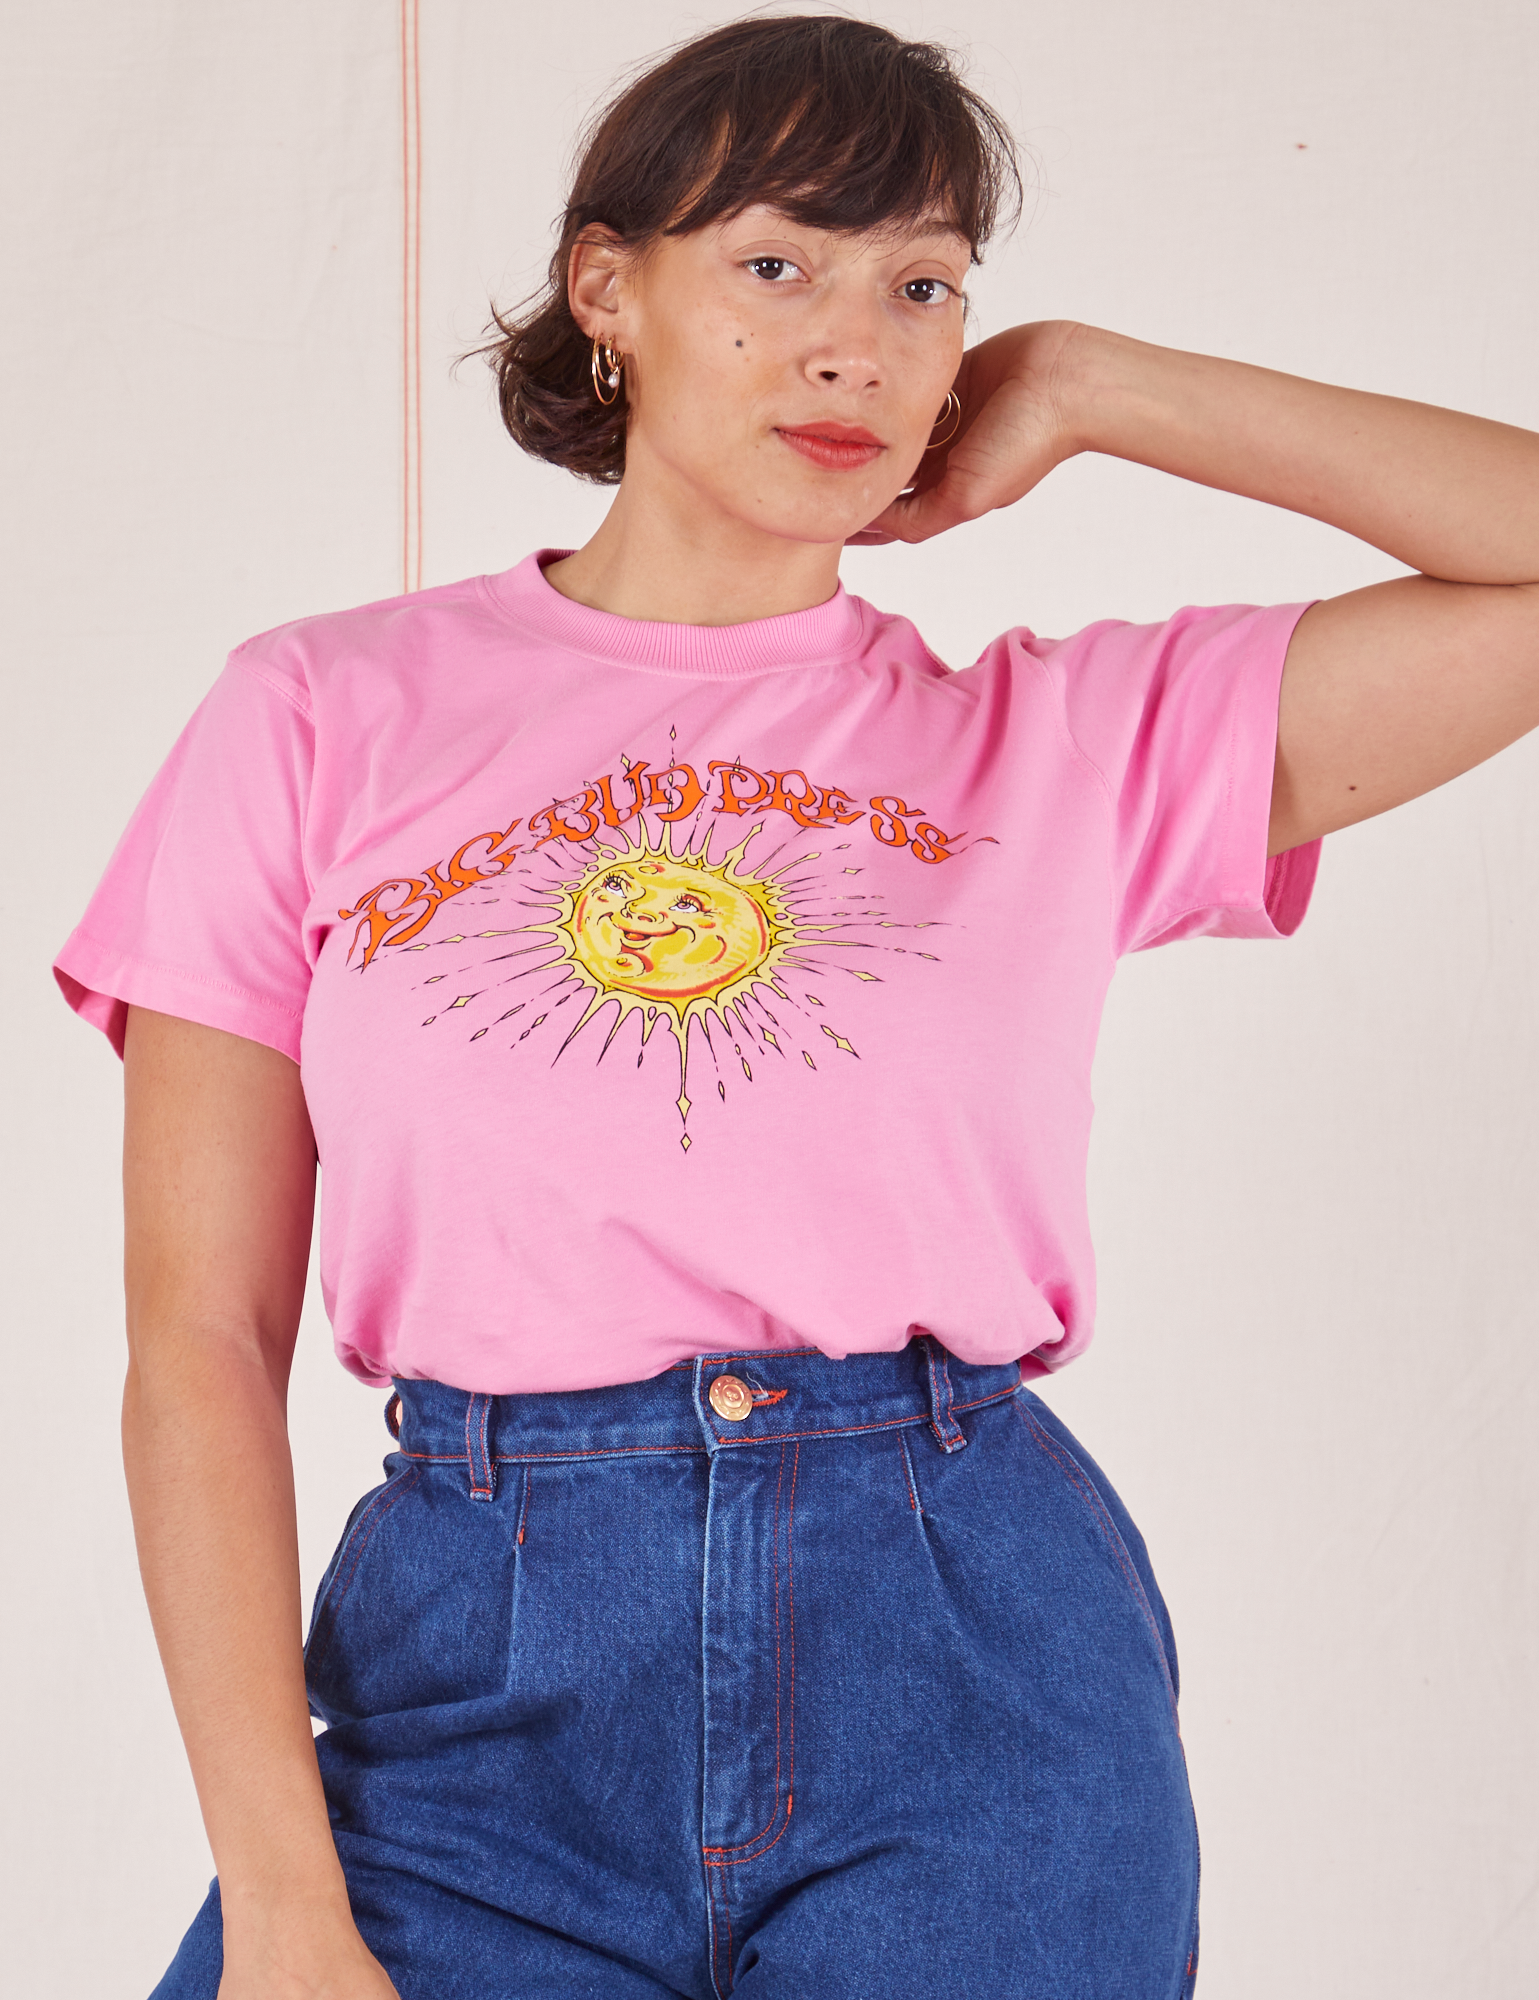 Organic Pink Sunshine & Coffee T Shirt